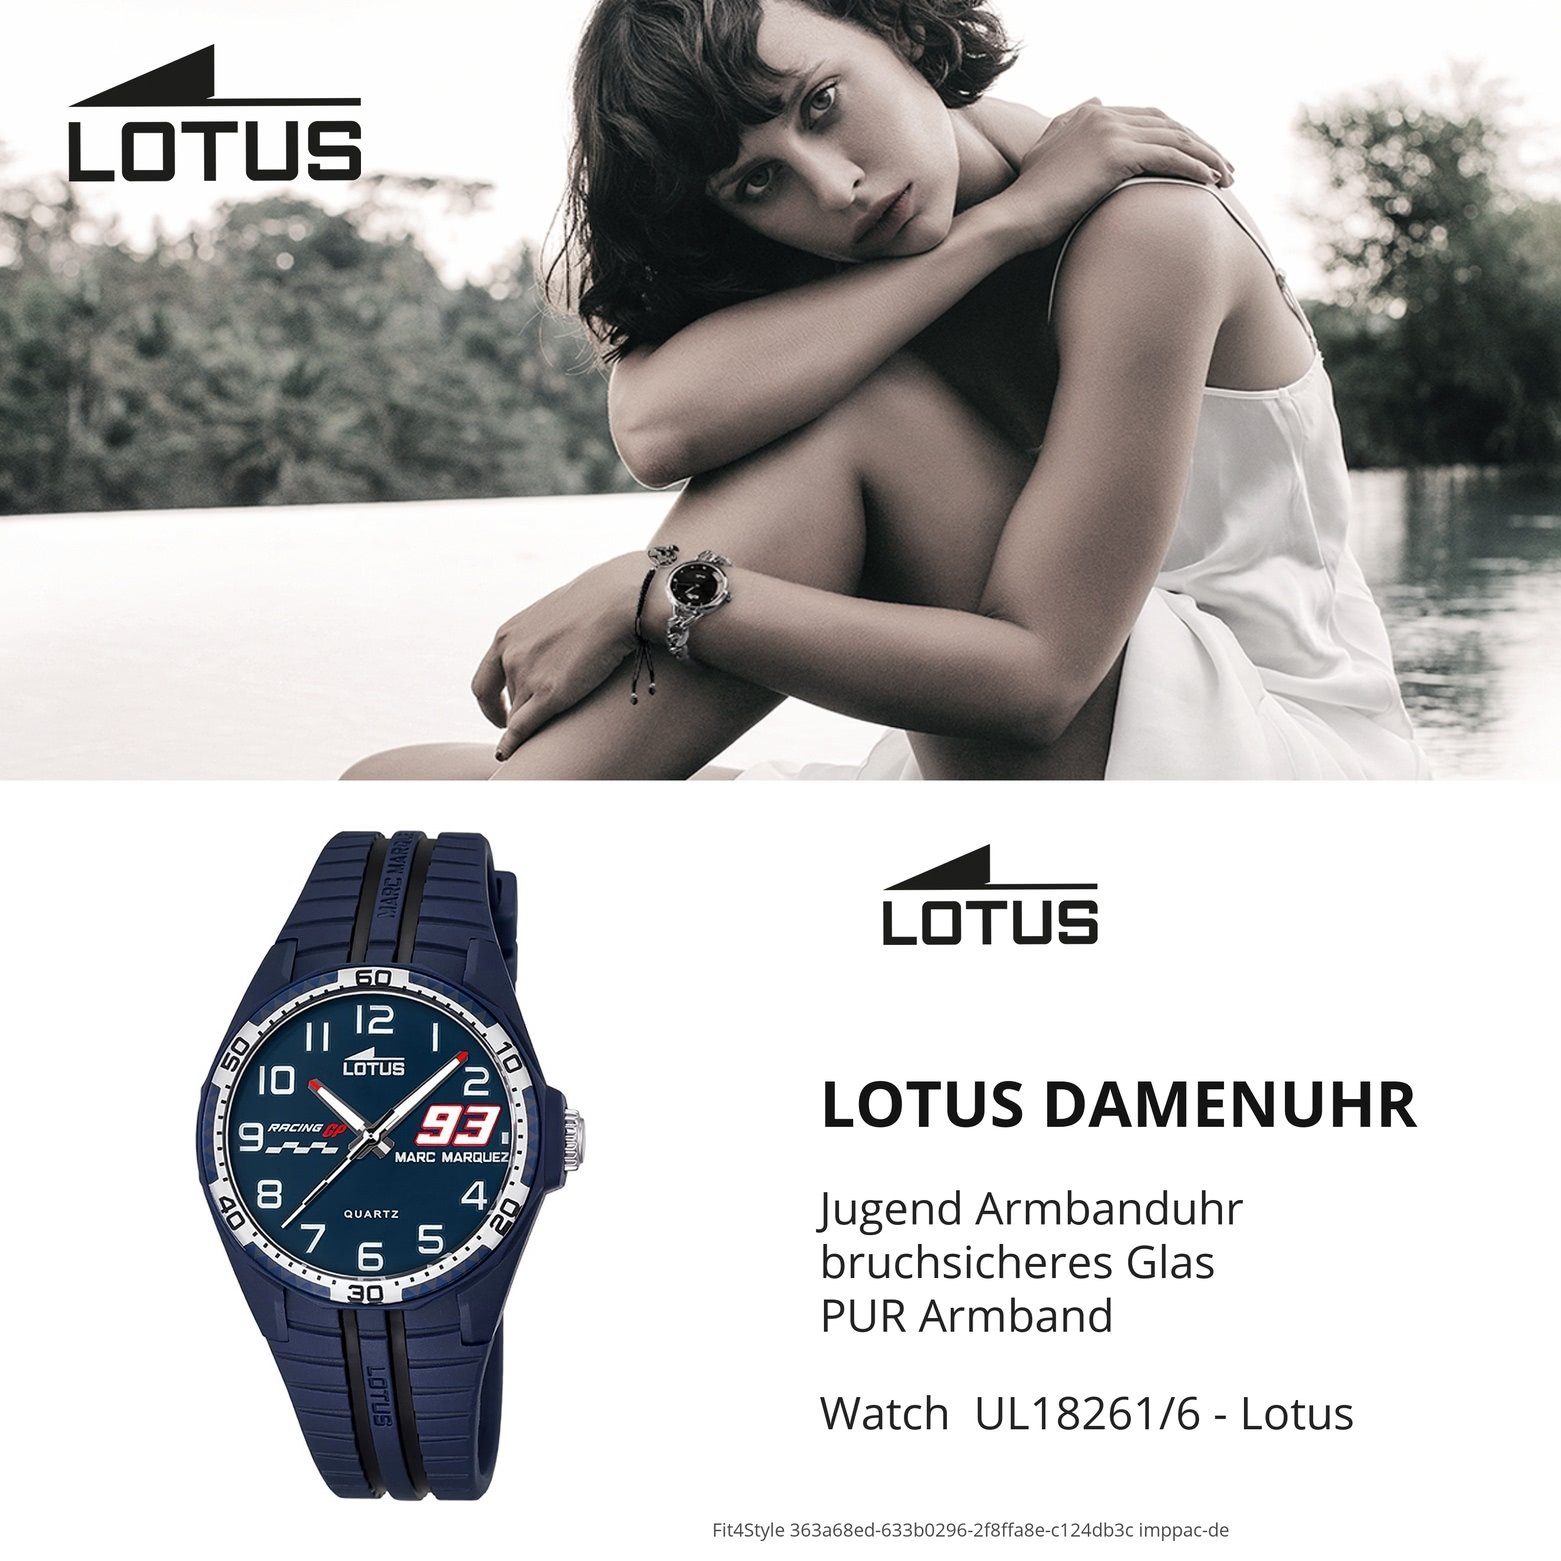 Armbanduhr PUR, blau, Quarzuhr tonneau, Jugend Jugend, Kinder Lotus L18261/6 schwarz PURarmband Sport Uhr Lotus rund,